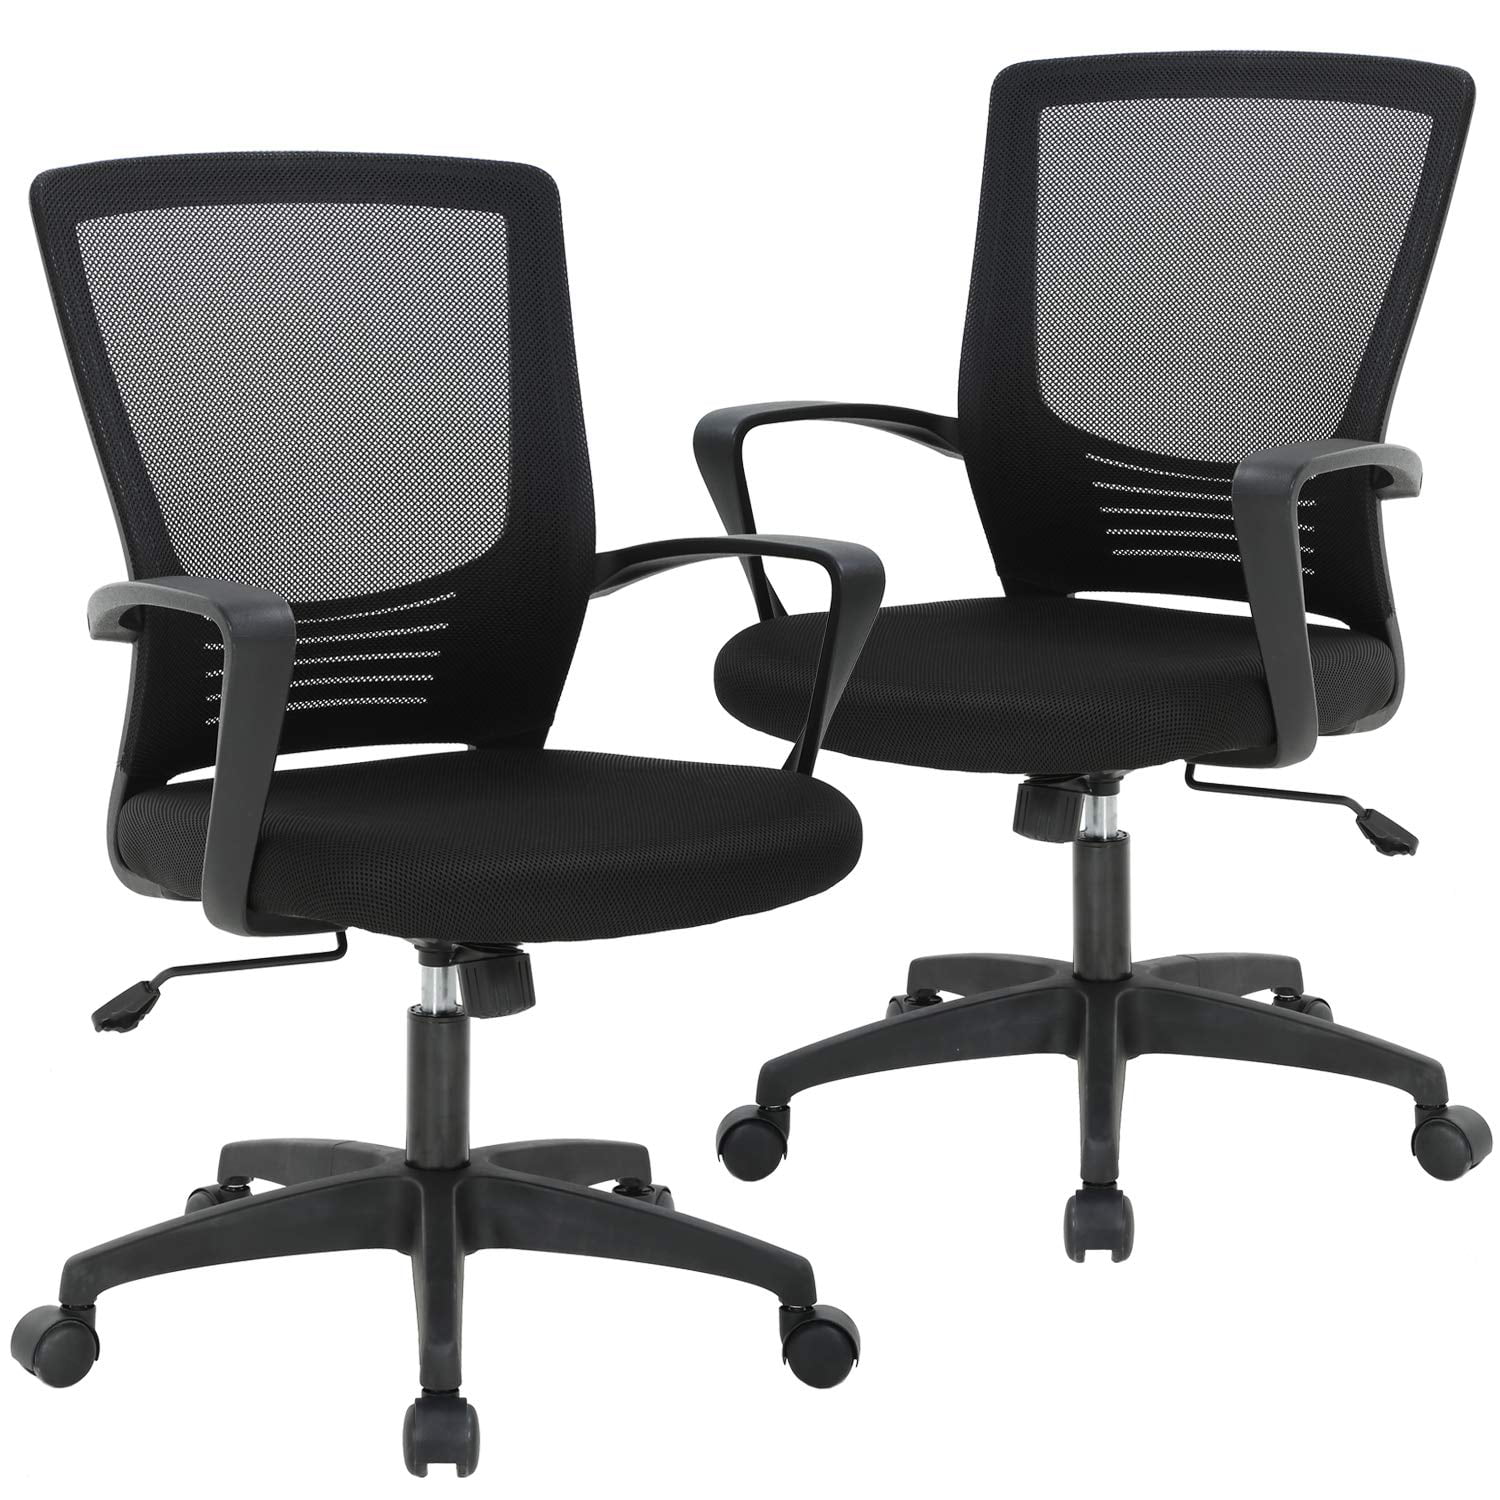 Office Chair Ergonomic Cheap Desk Chair Swivel Rolling Computer Chair Executive Lumbar Support